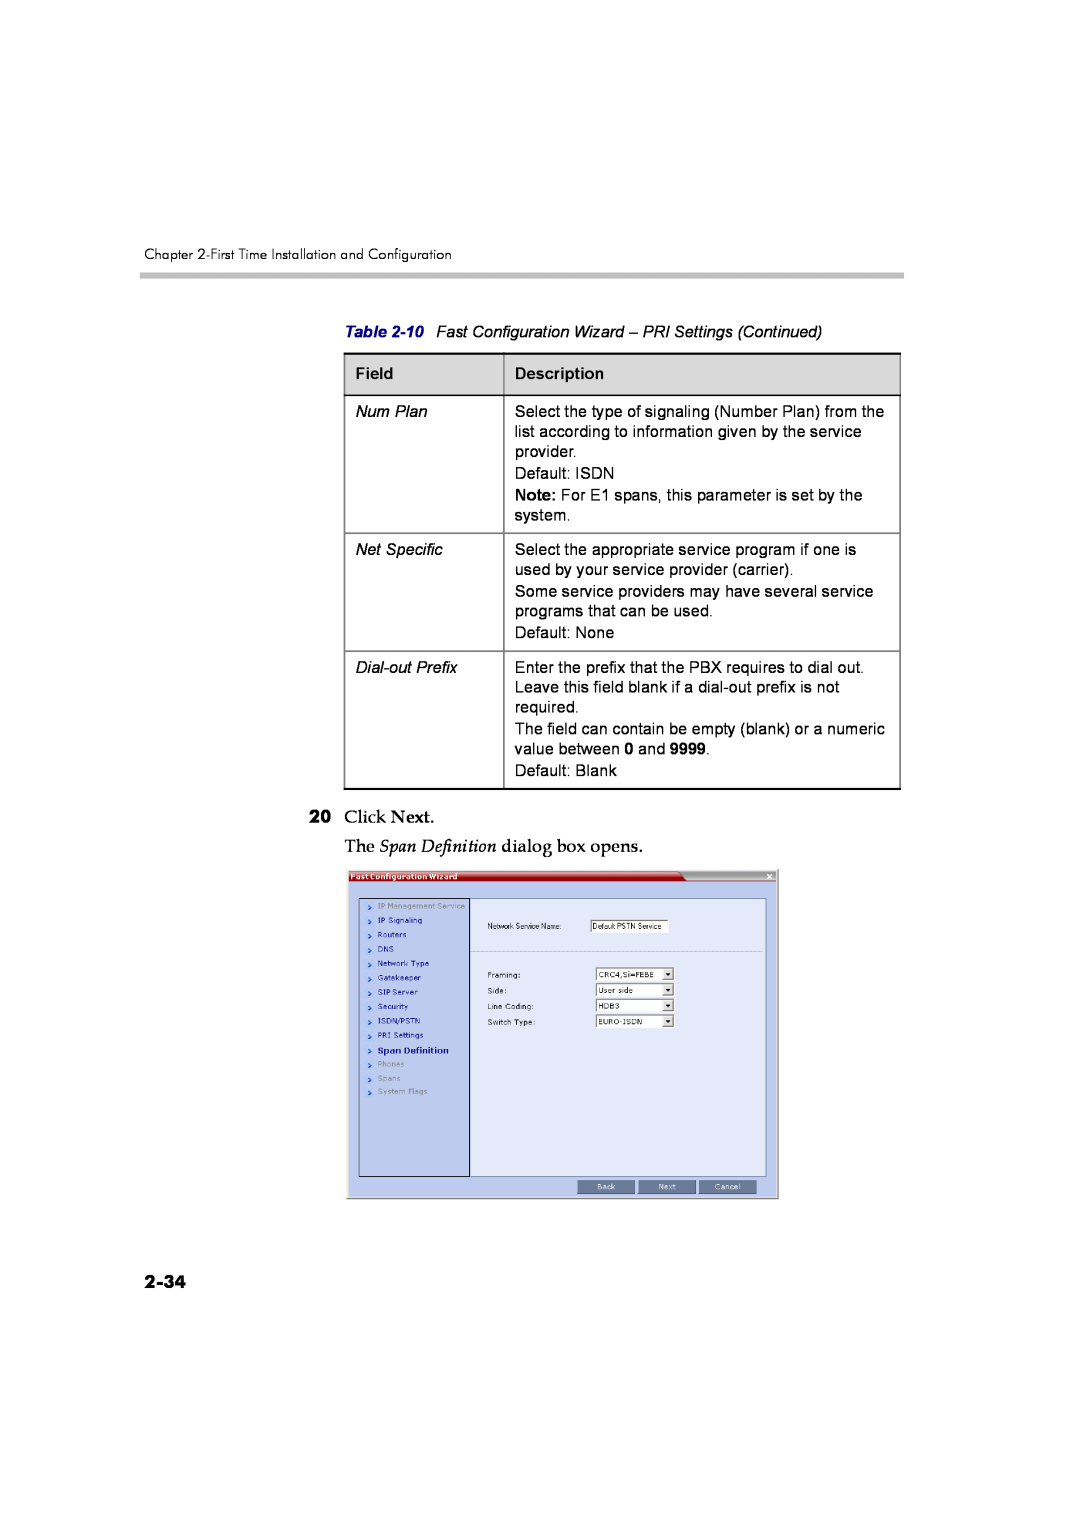 Polycom DOC2560B manual 2-34, Click Next The Span Definition dialog box opens, Field, Description 